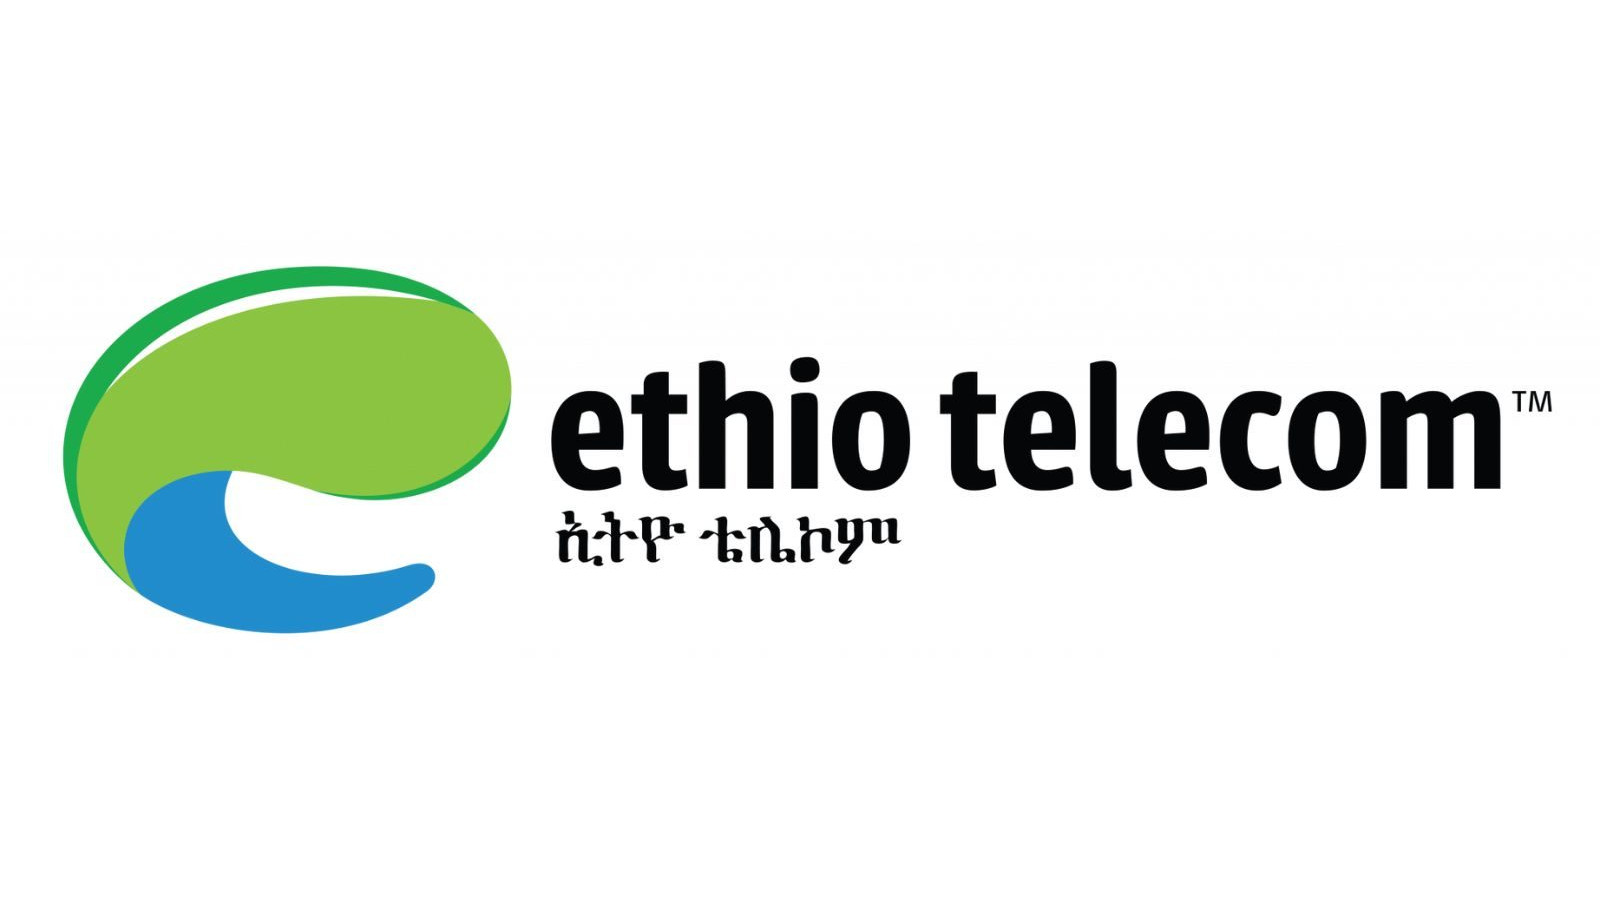 Ethiotelecom 5 ETB Mobile Top-up ET, $0.68